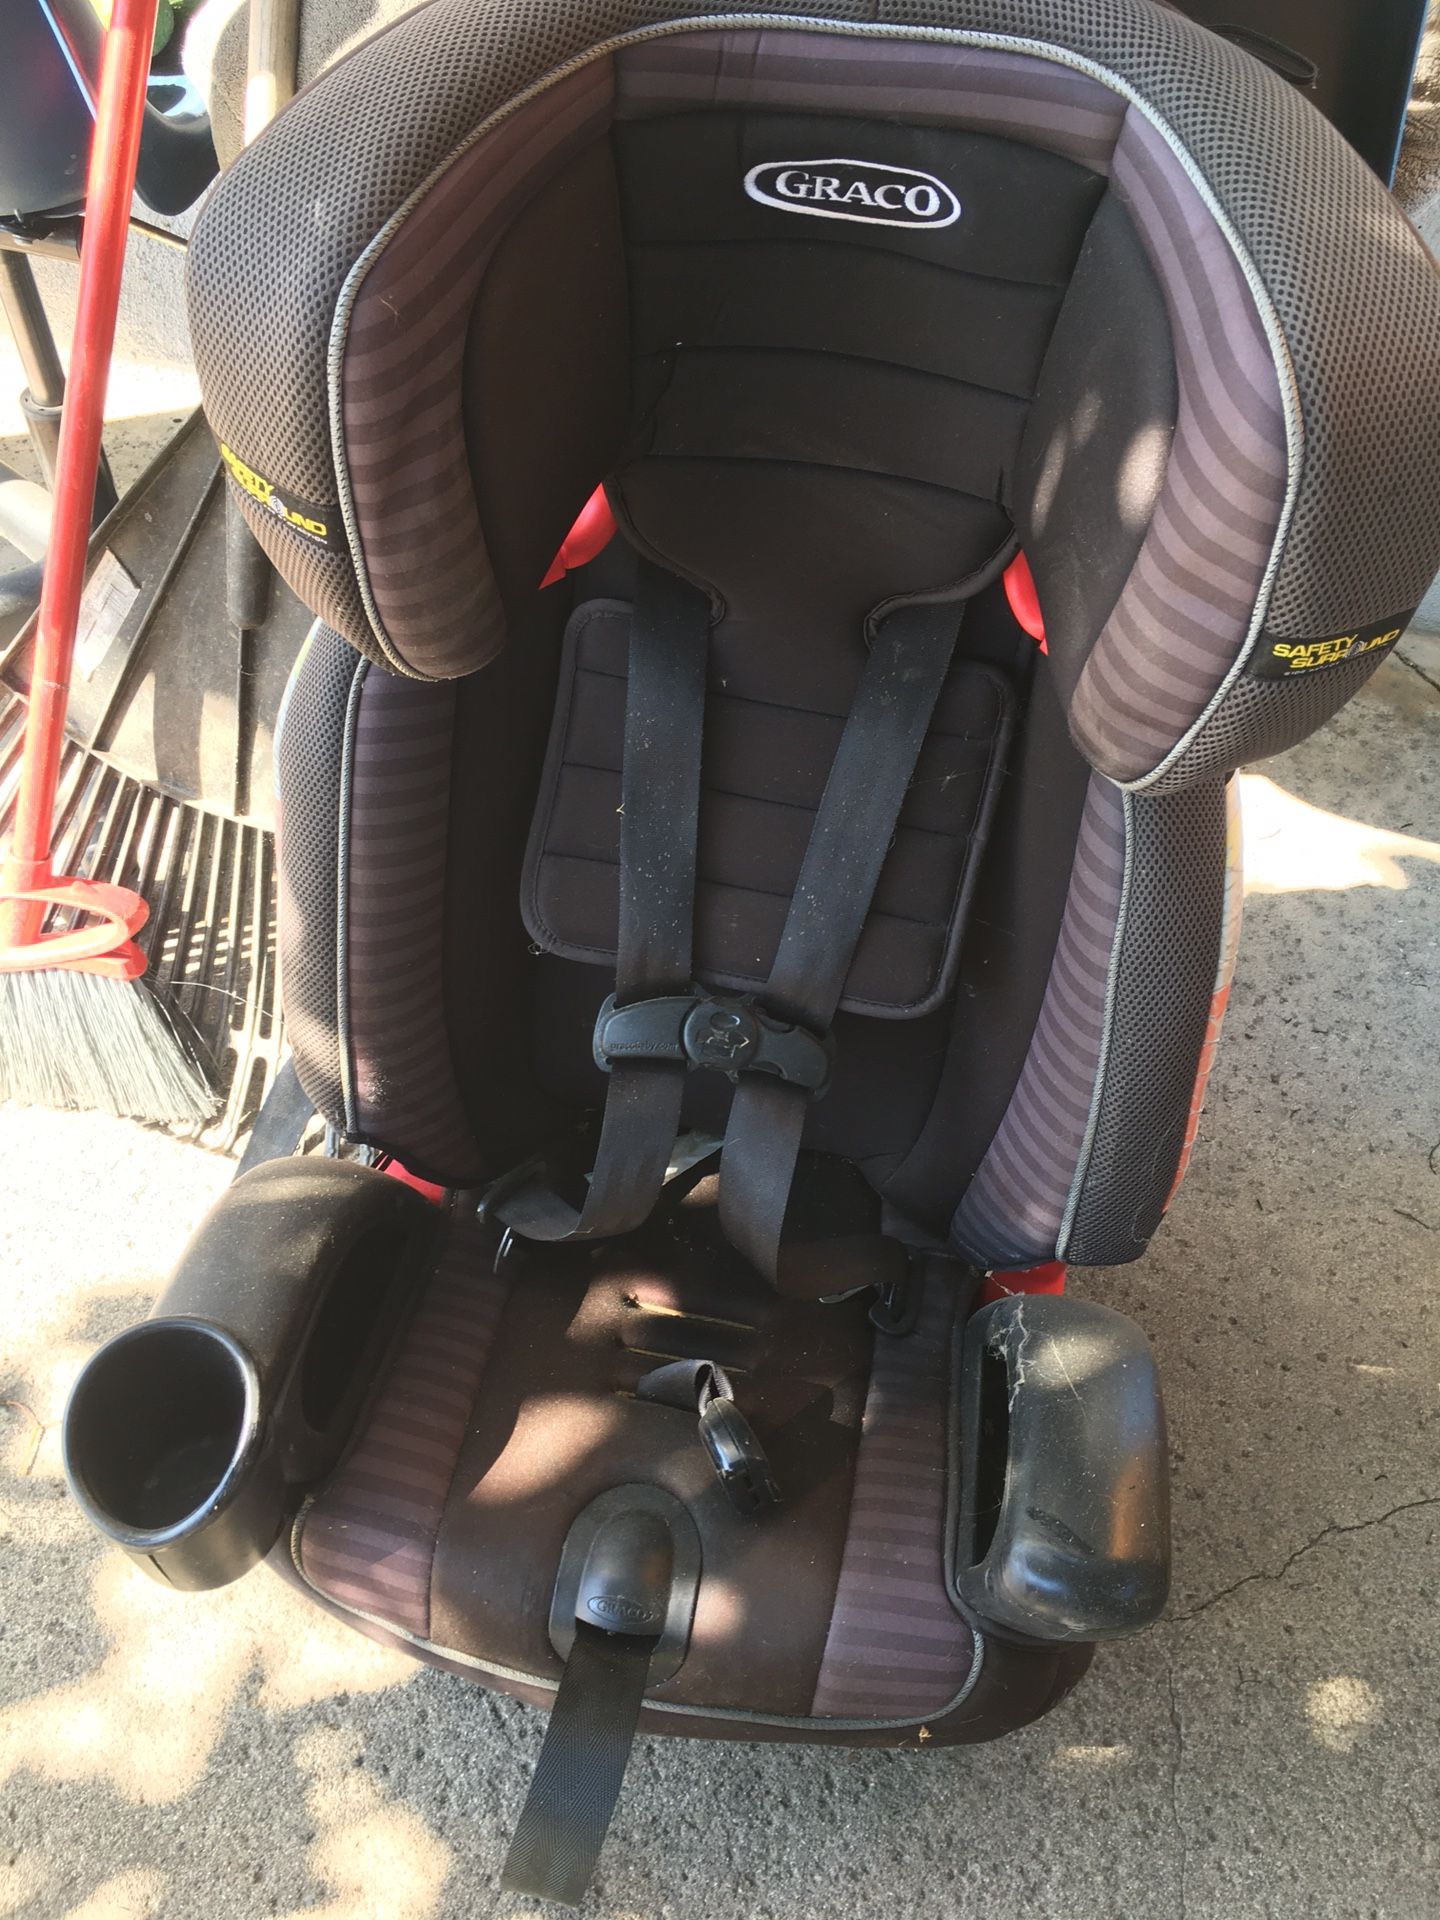 Free - Graco Car seat, infant to 8 years - North Santa Ana